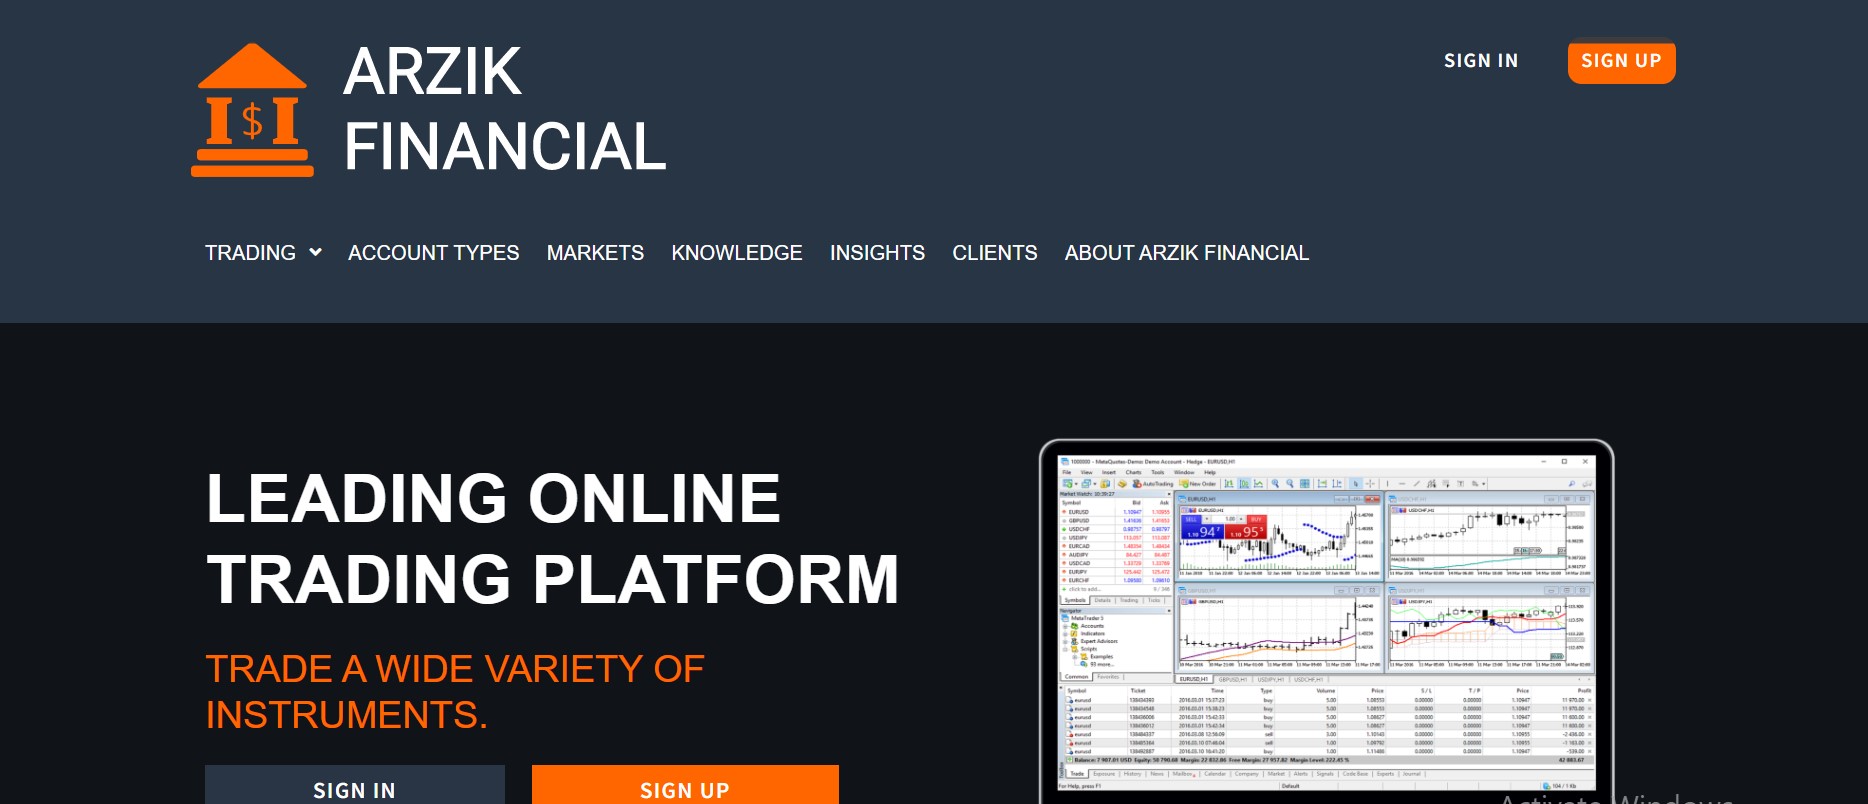 Arzik Financial website